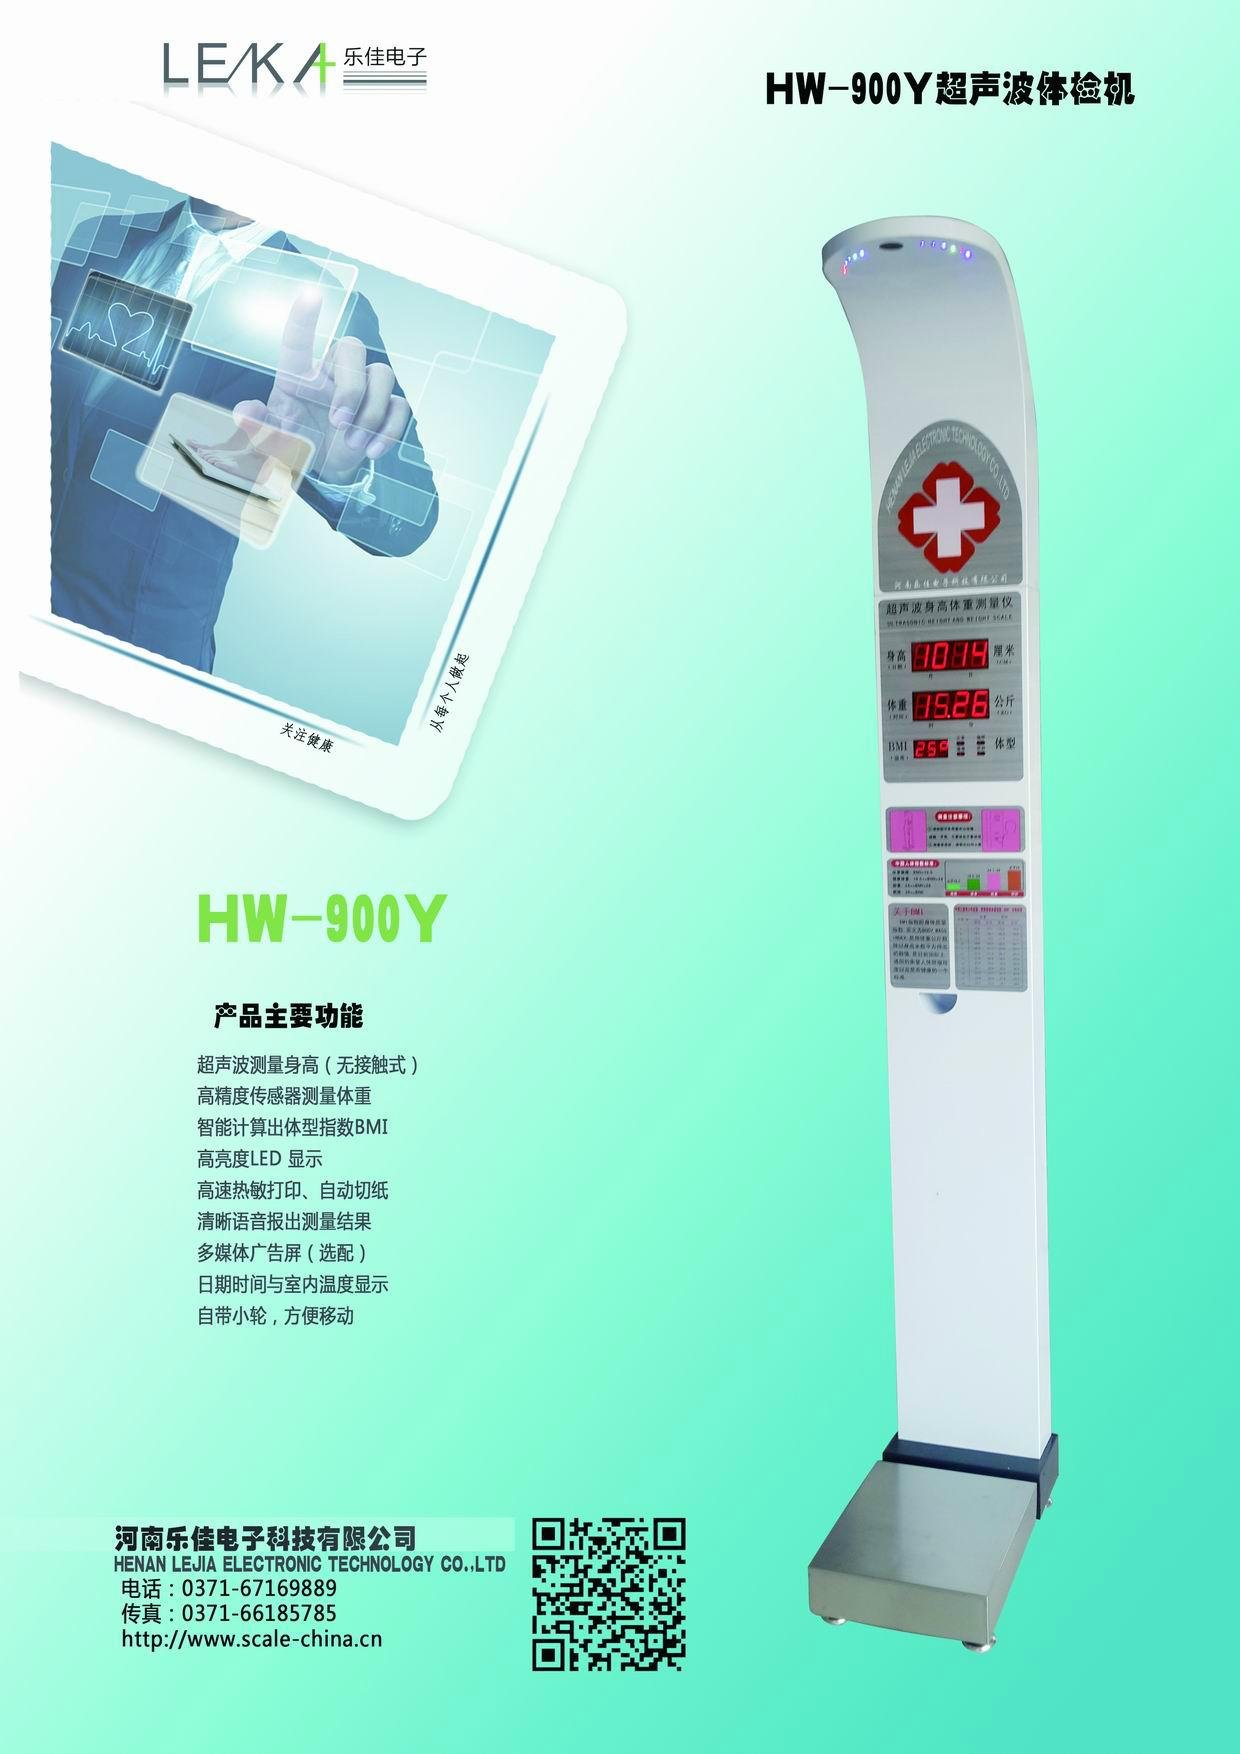 HW-900Y ultrasonic physical examination scale